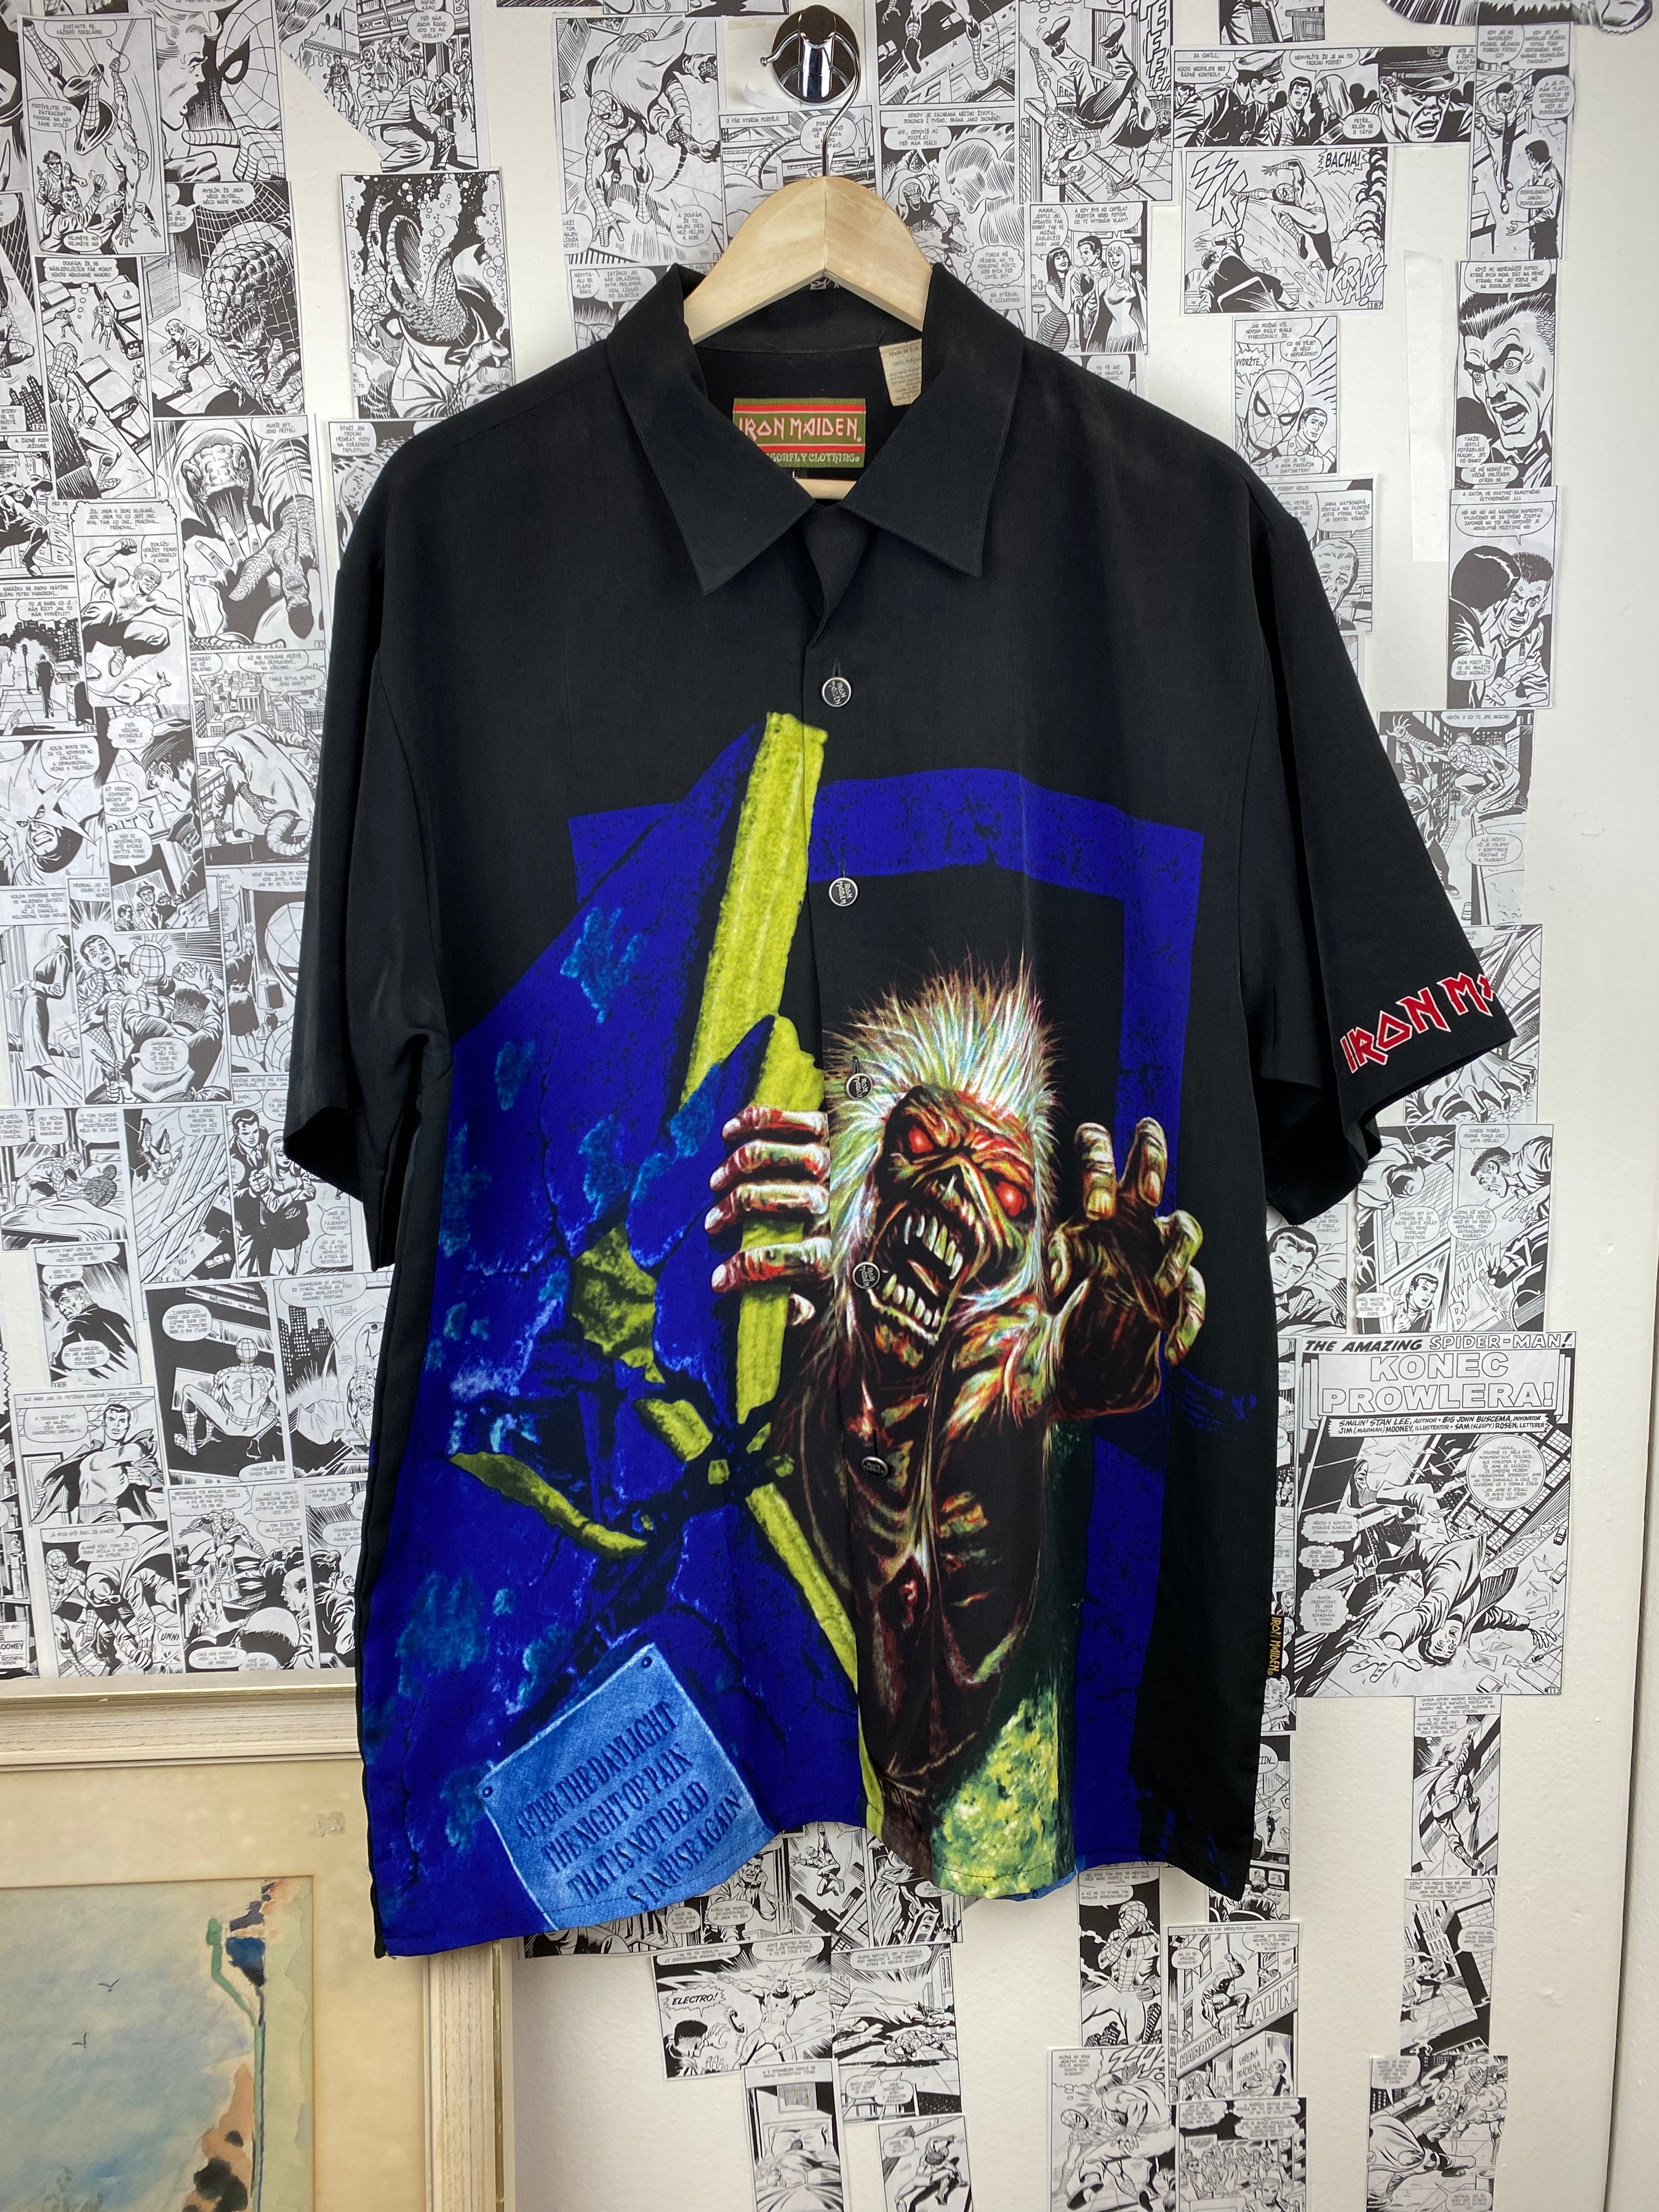 Dragonfly x Iron Maiden - Summer Shirt - size L